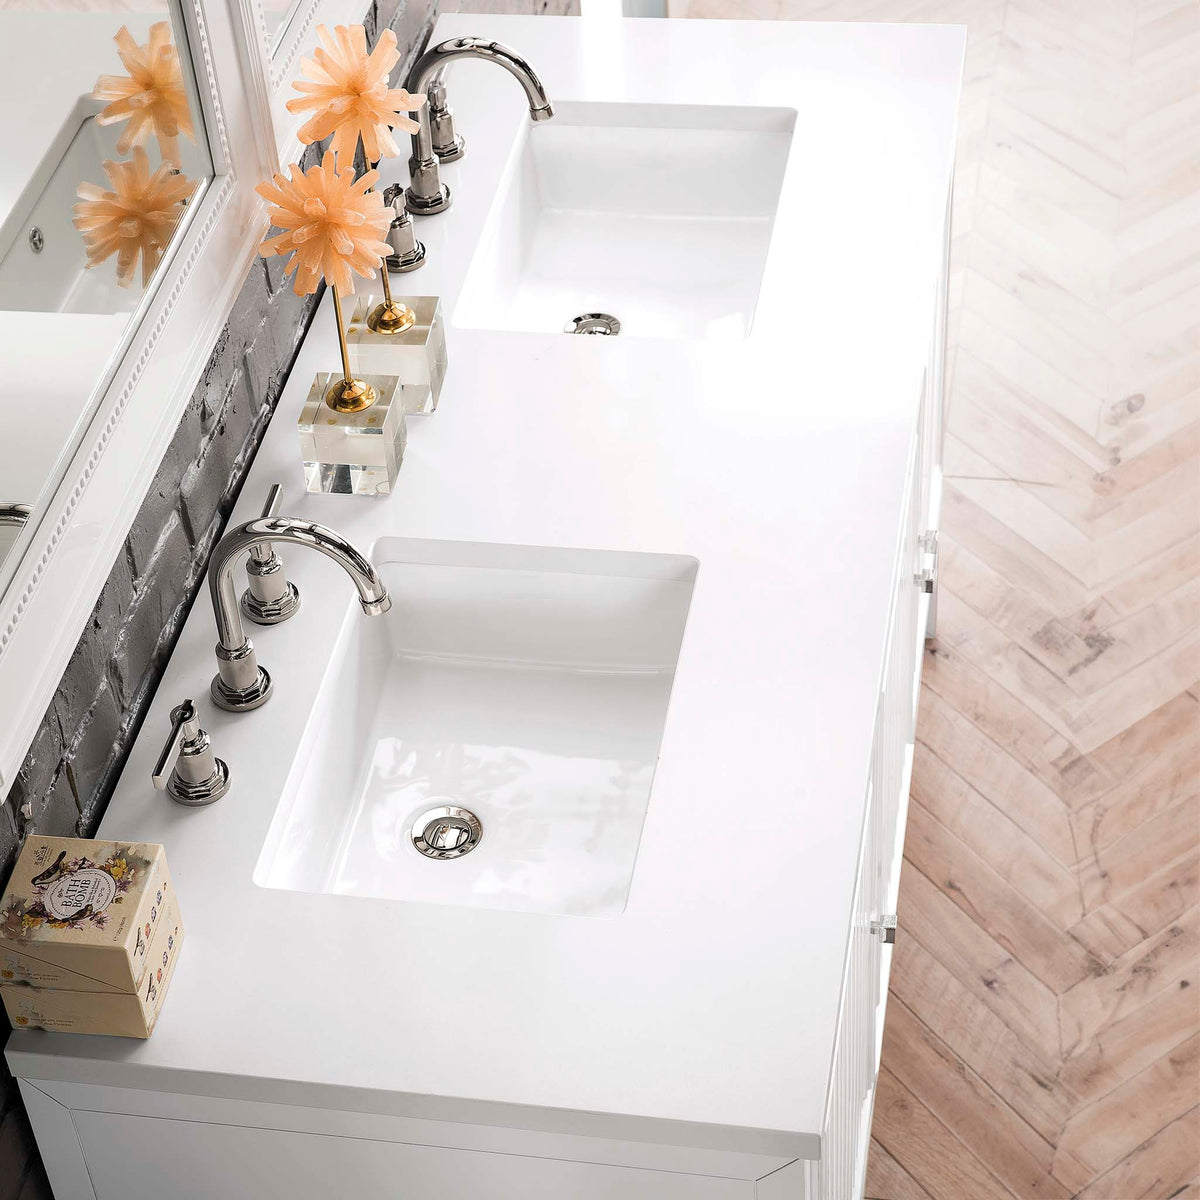 60" Athens Double Bathroom Vanity, Glossy White w/ White Zeus Quartz Top